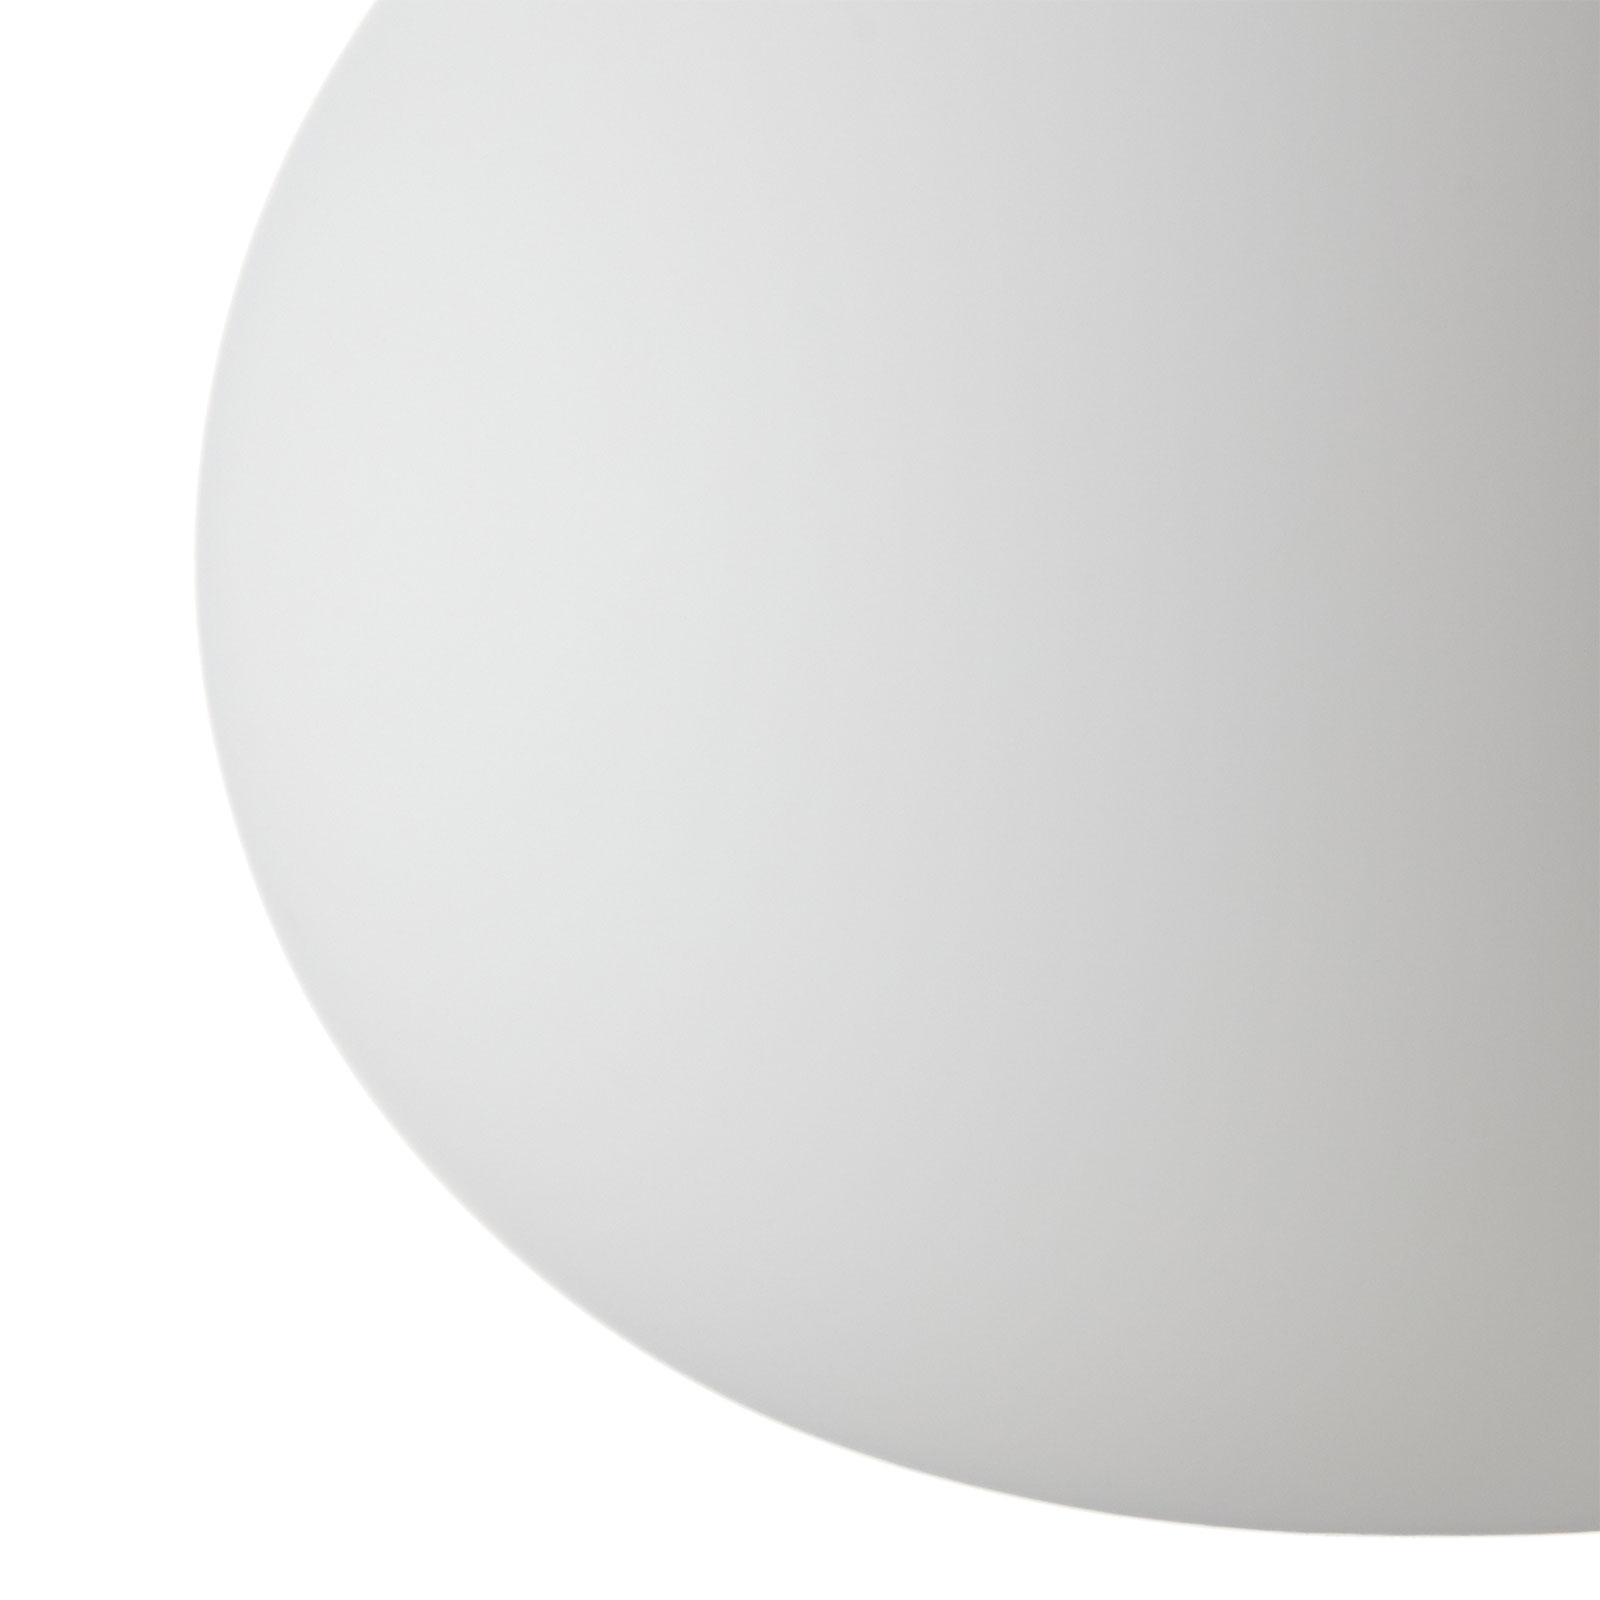 FLOS Mini Glo-Ball C/W - designer ceiling light